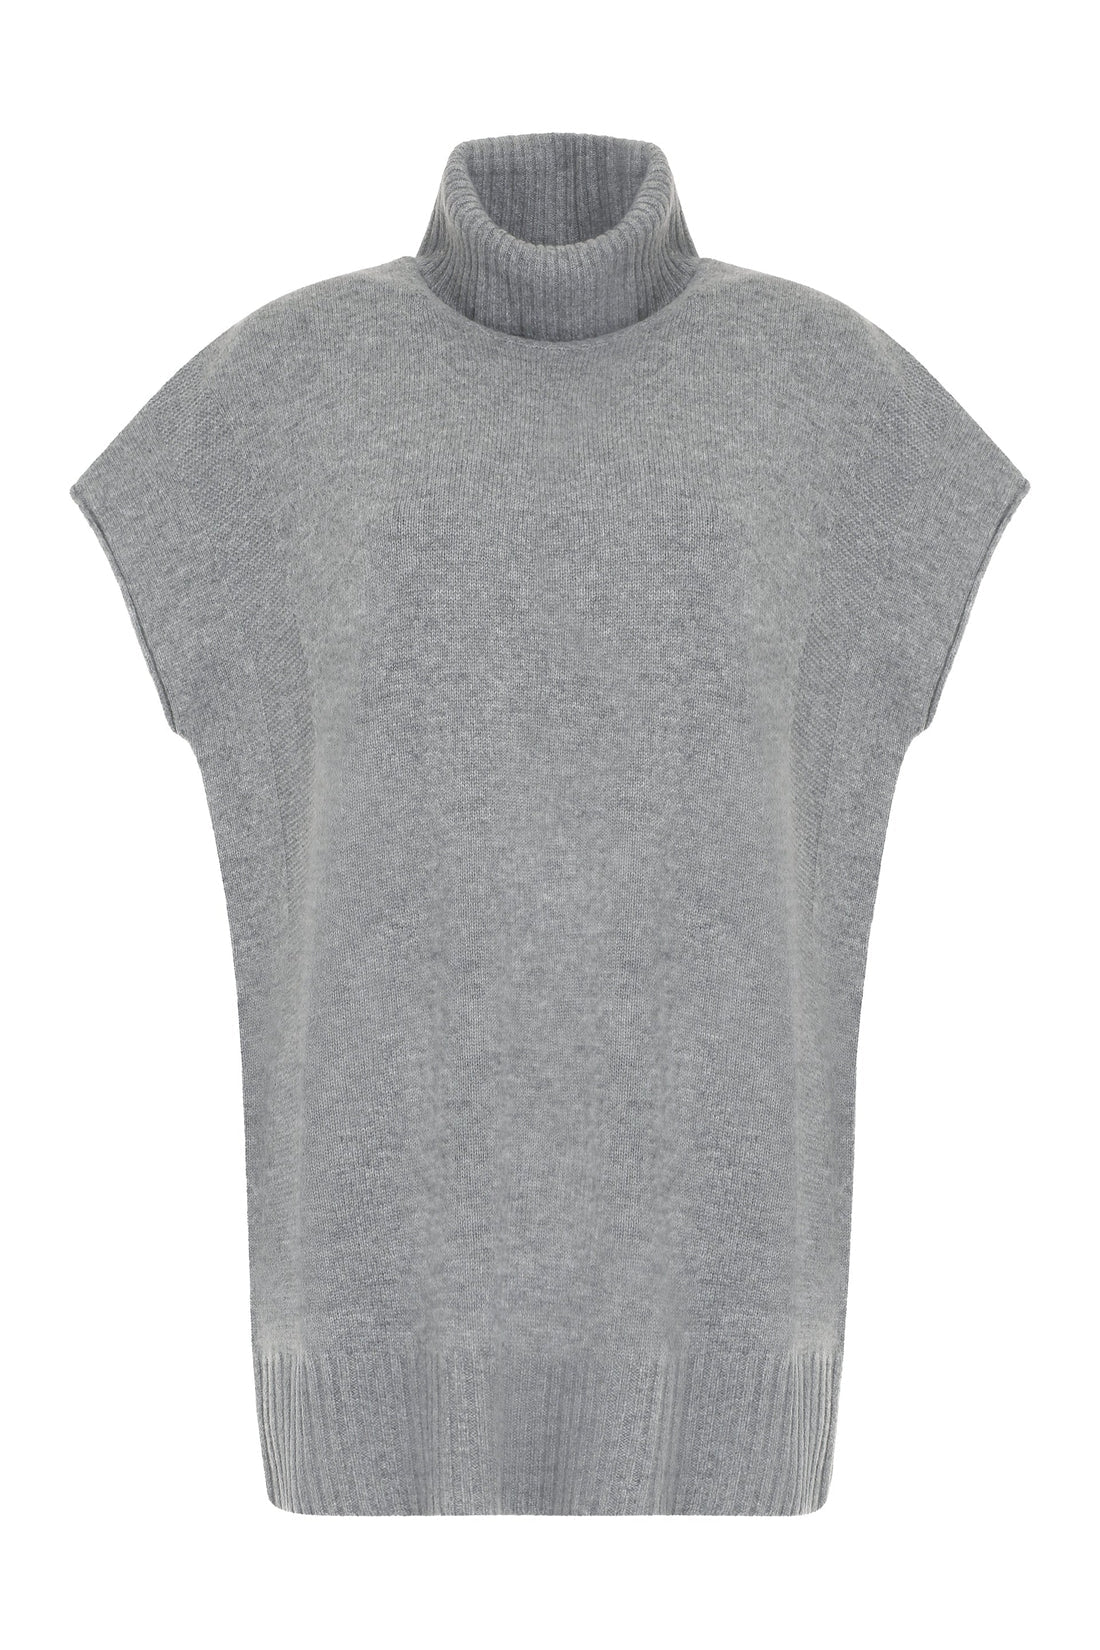 Max Mara Studio-OUTLET-SALE-Fabio knitted vest-ARCHIVIST